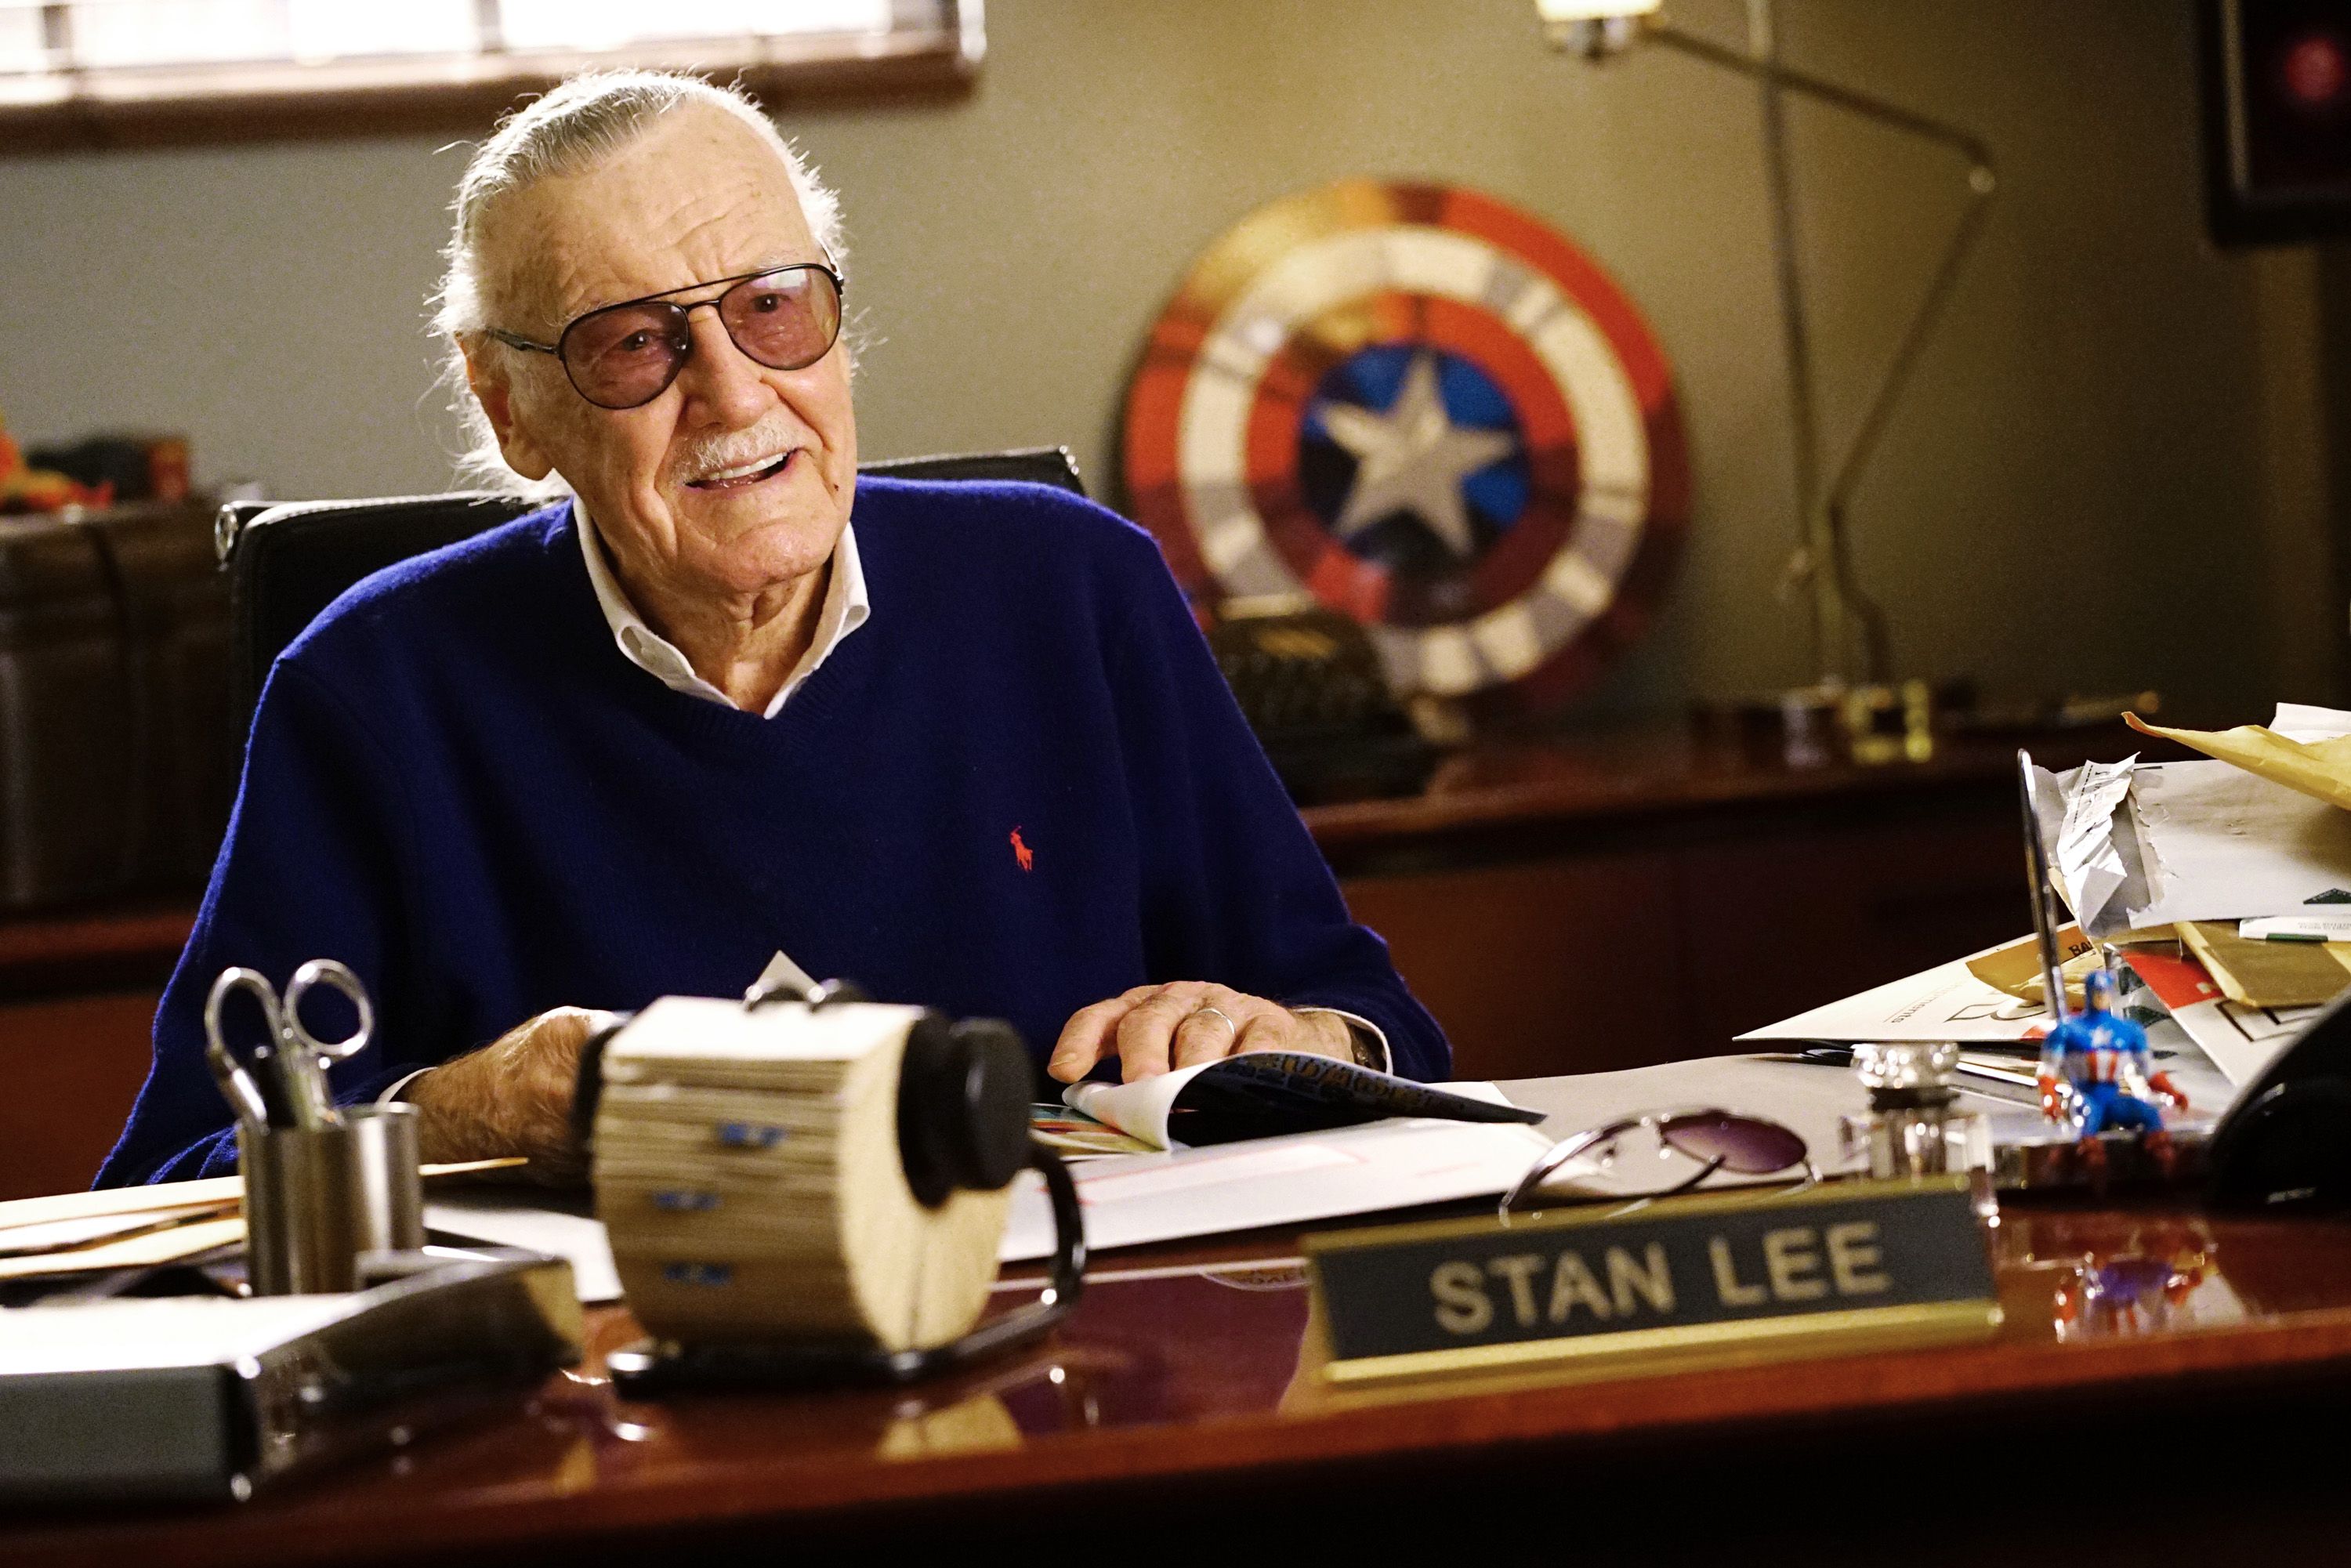 Stan Lee Dead at 95 - Marvel Comic Book Empire Creator Obituary